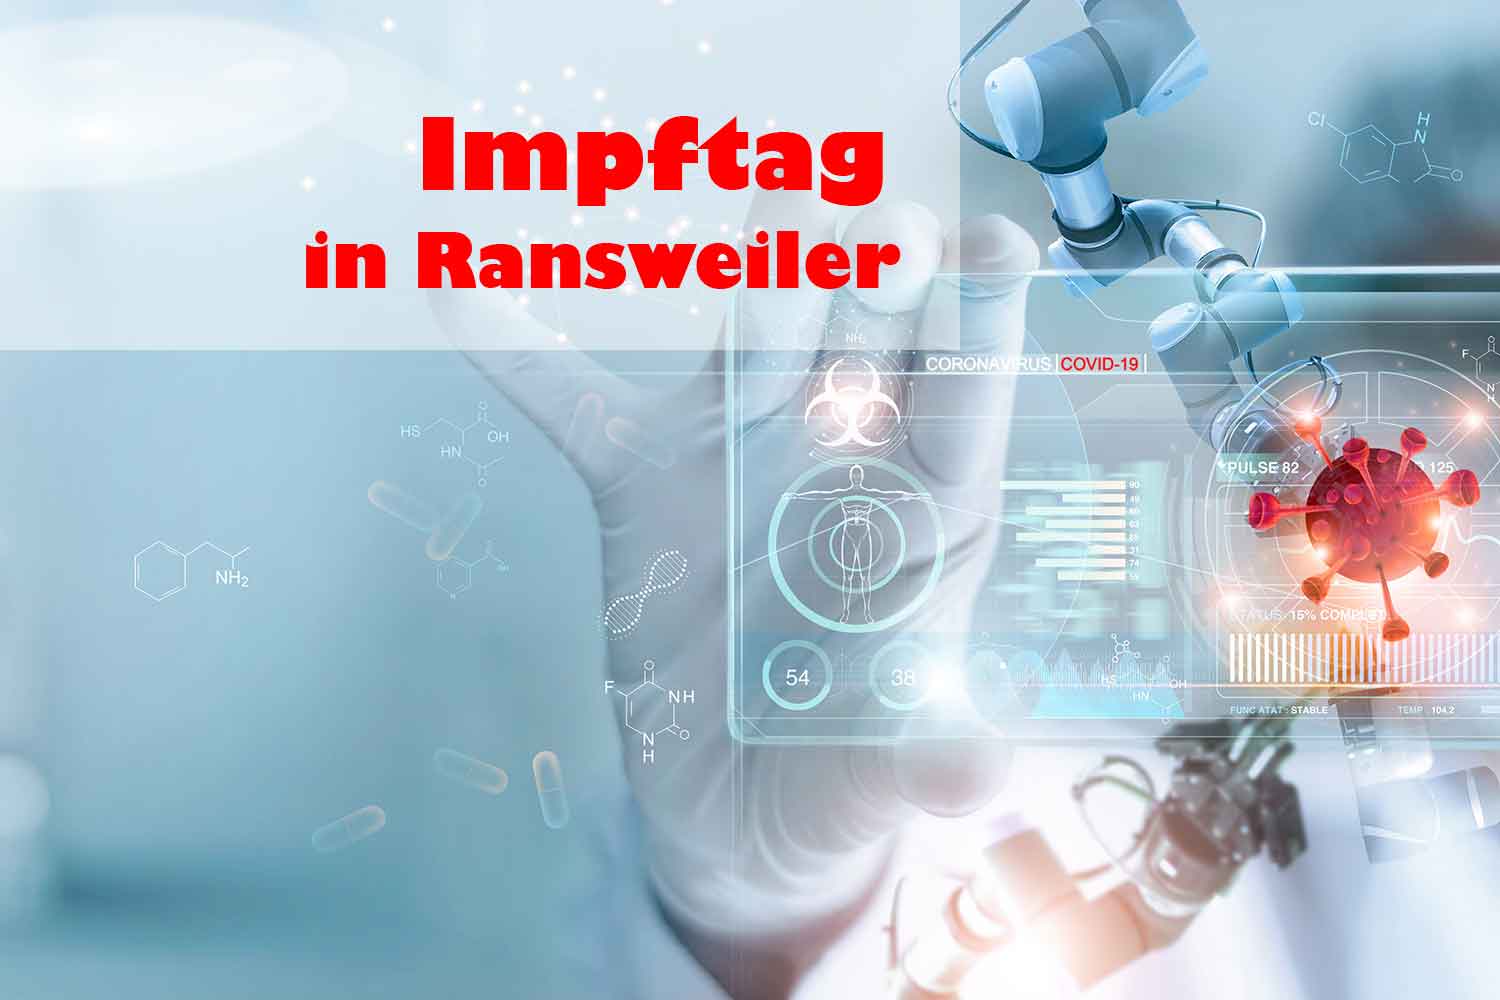 Impftag in Ransweiler